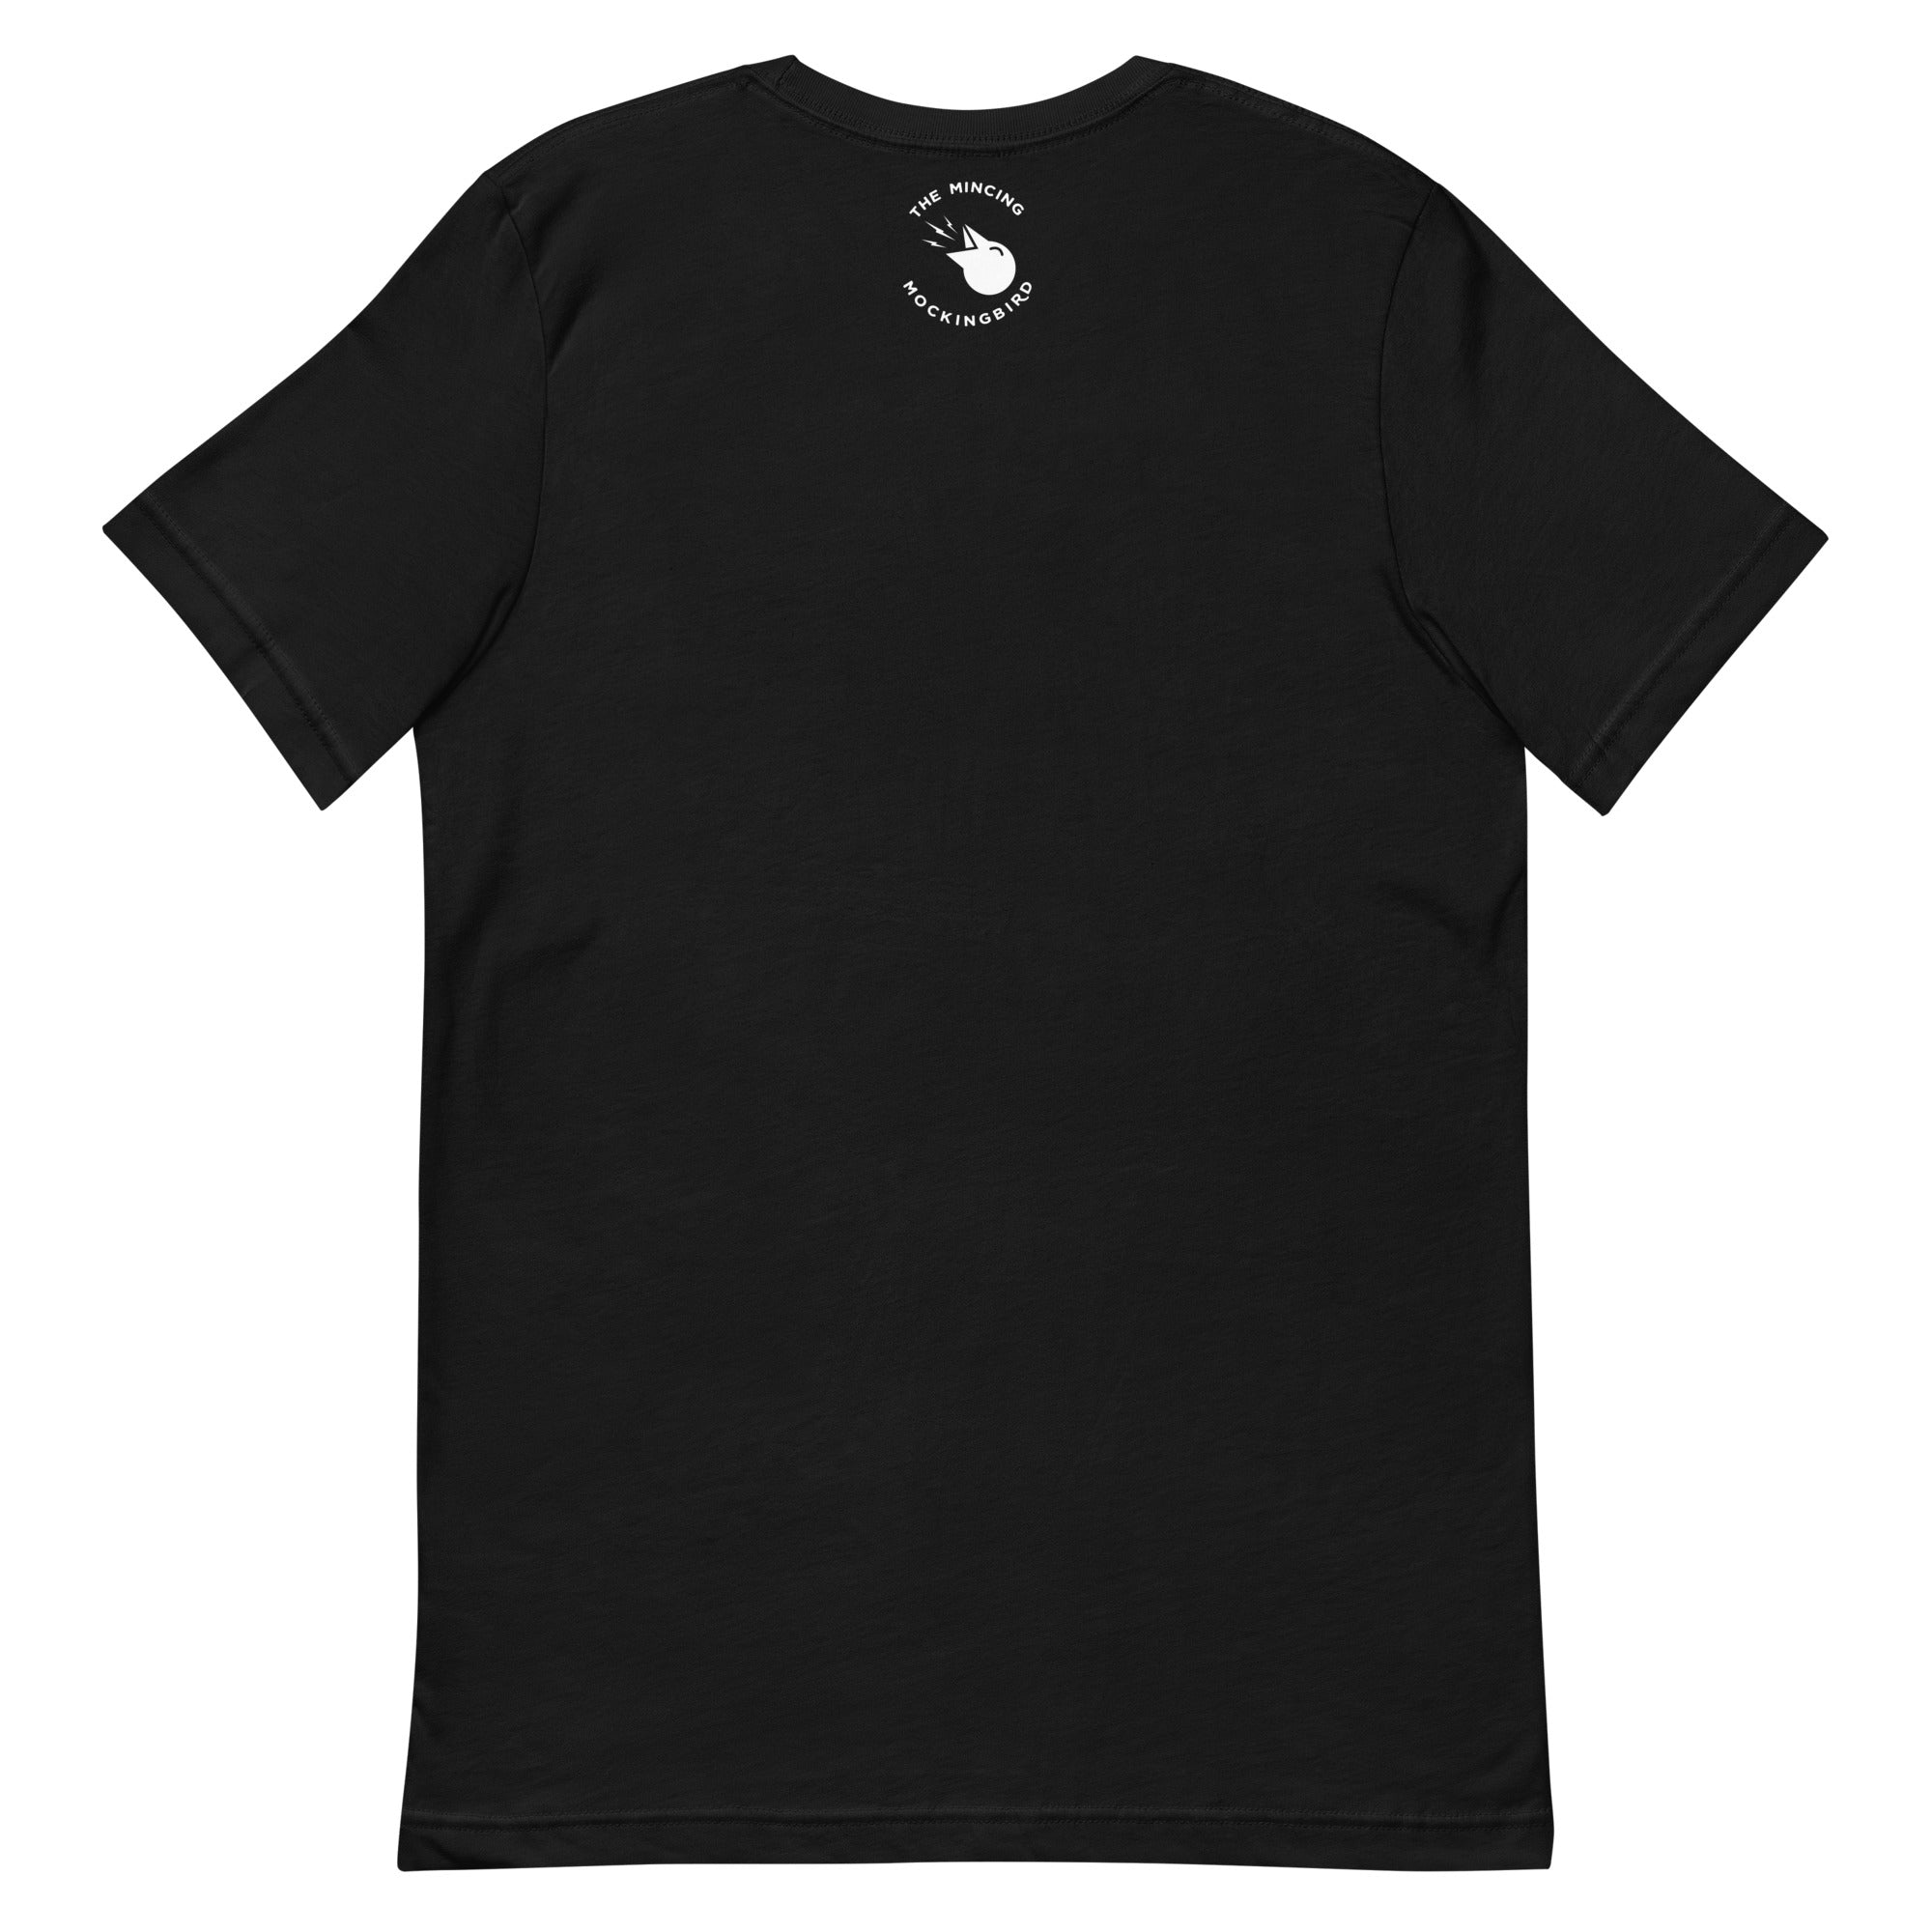 Jackassery - Unisex T-Shirt